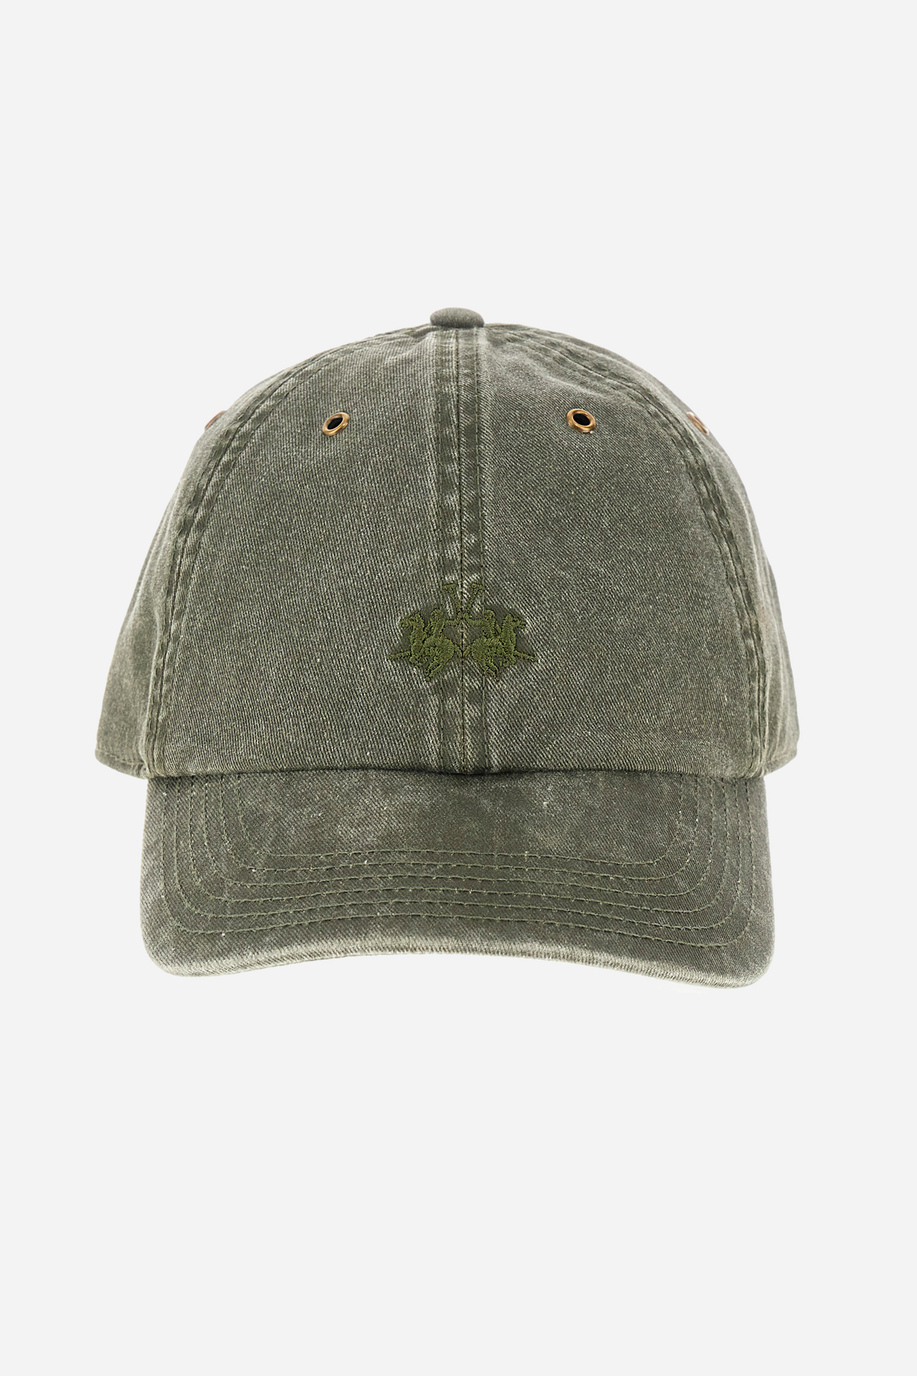 Baseball cap in cotton - Yarley - Hats | La Martina - Official Online Shop